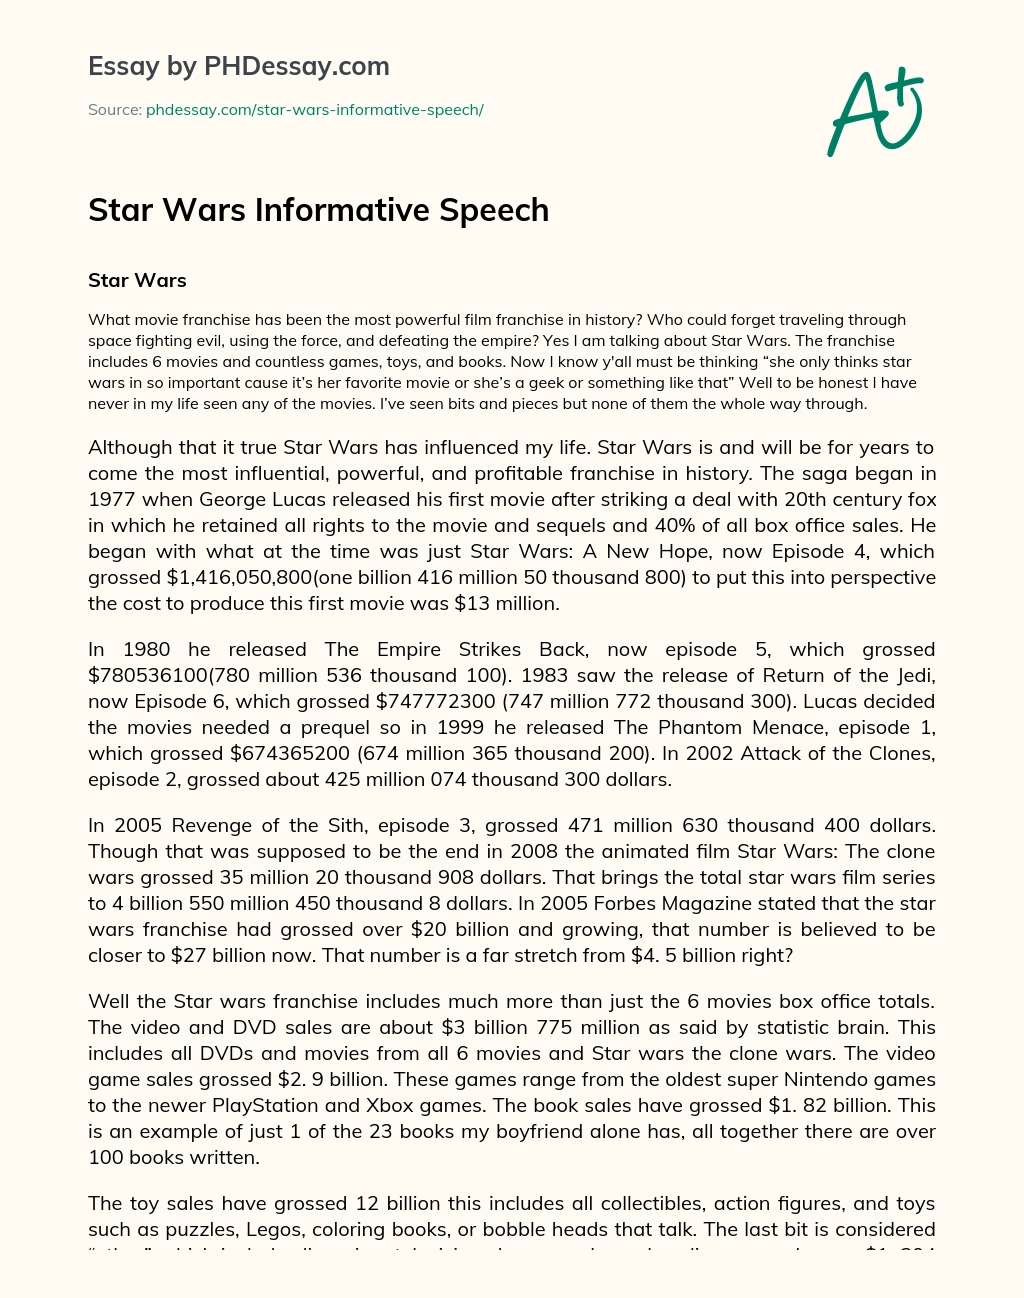 Star Wars Informative Speech essay